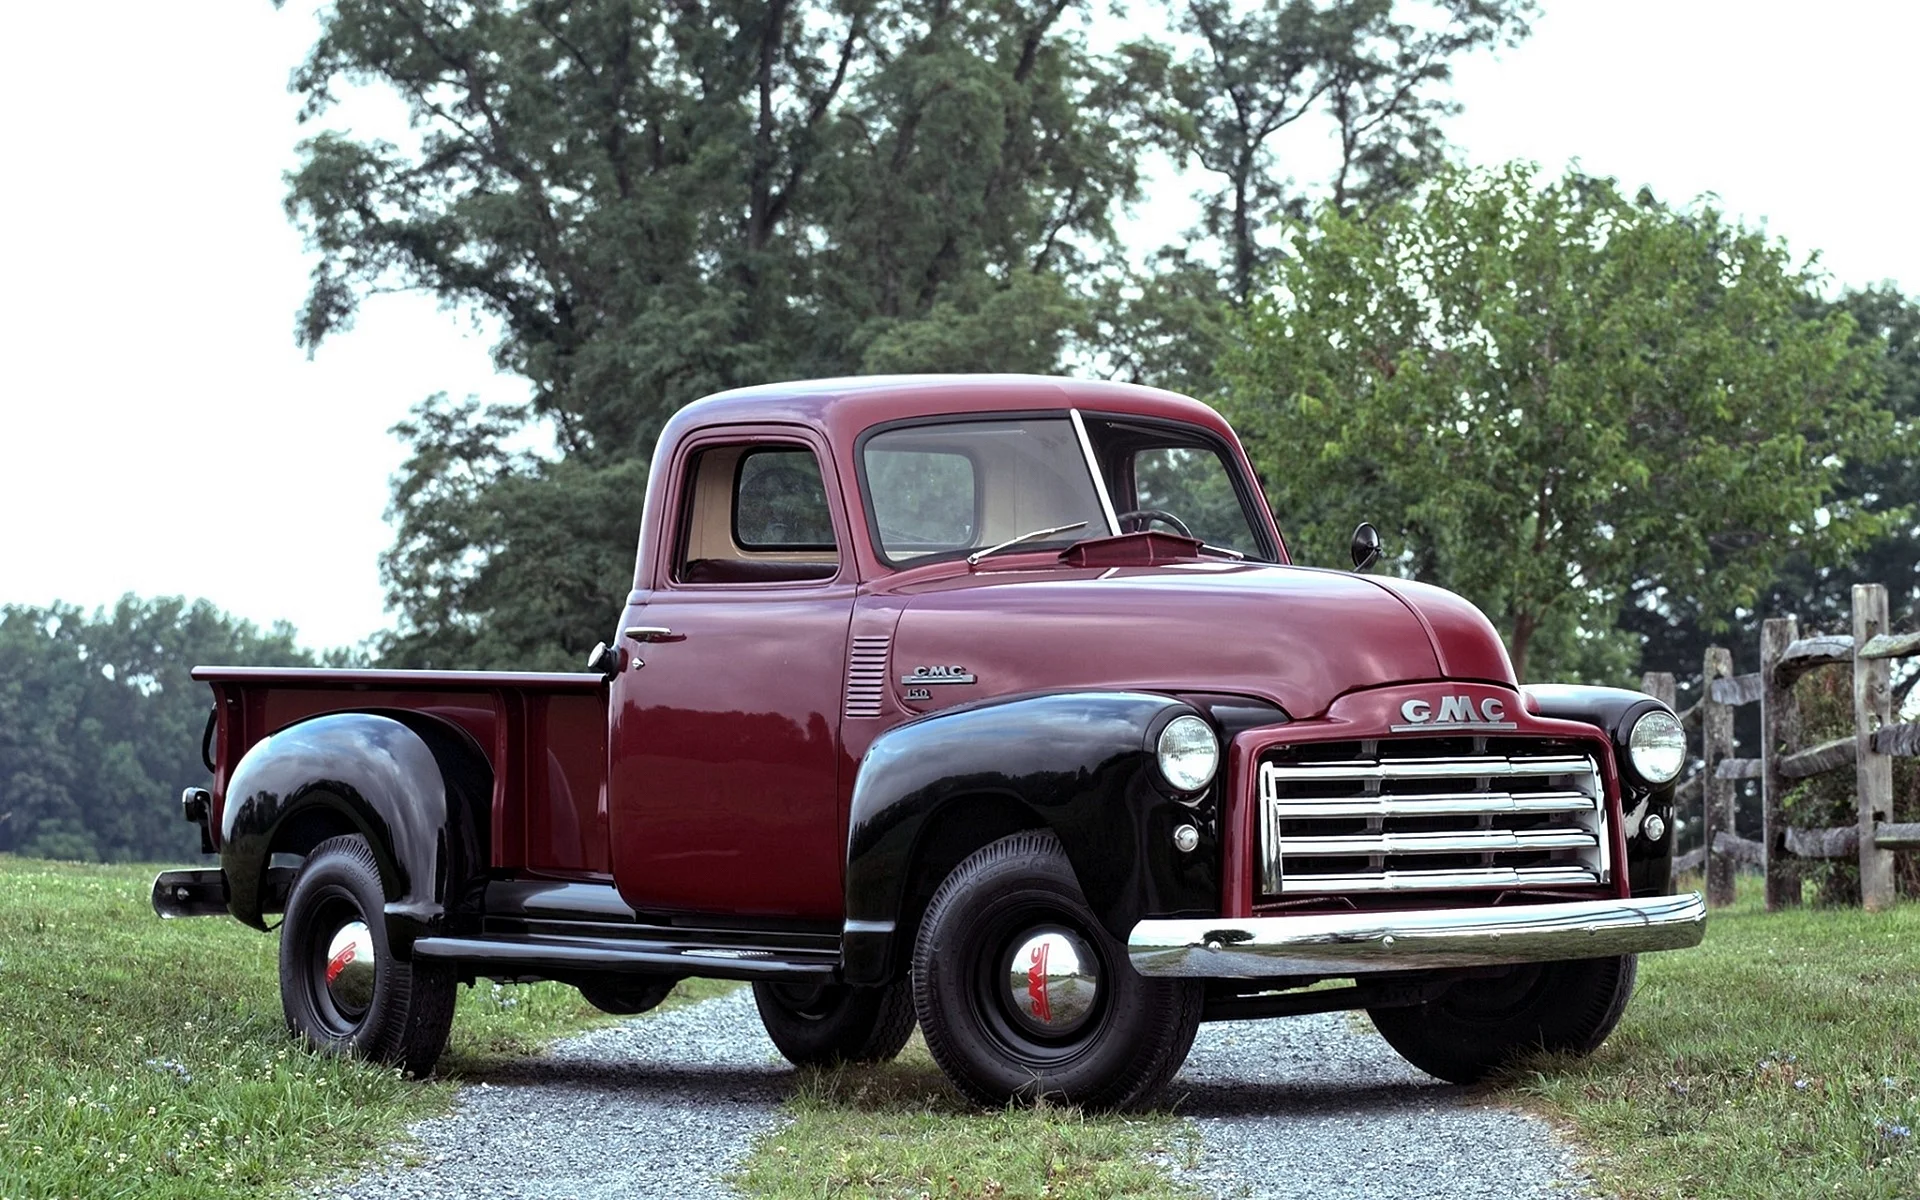 1950 Ford Pickup Truck Wallpaper